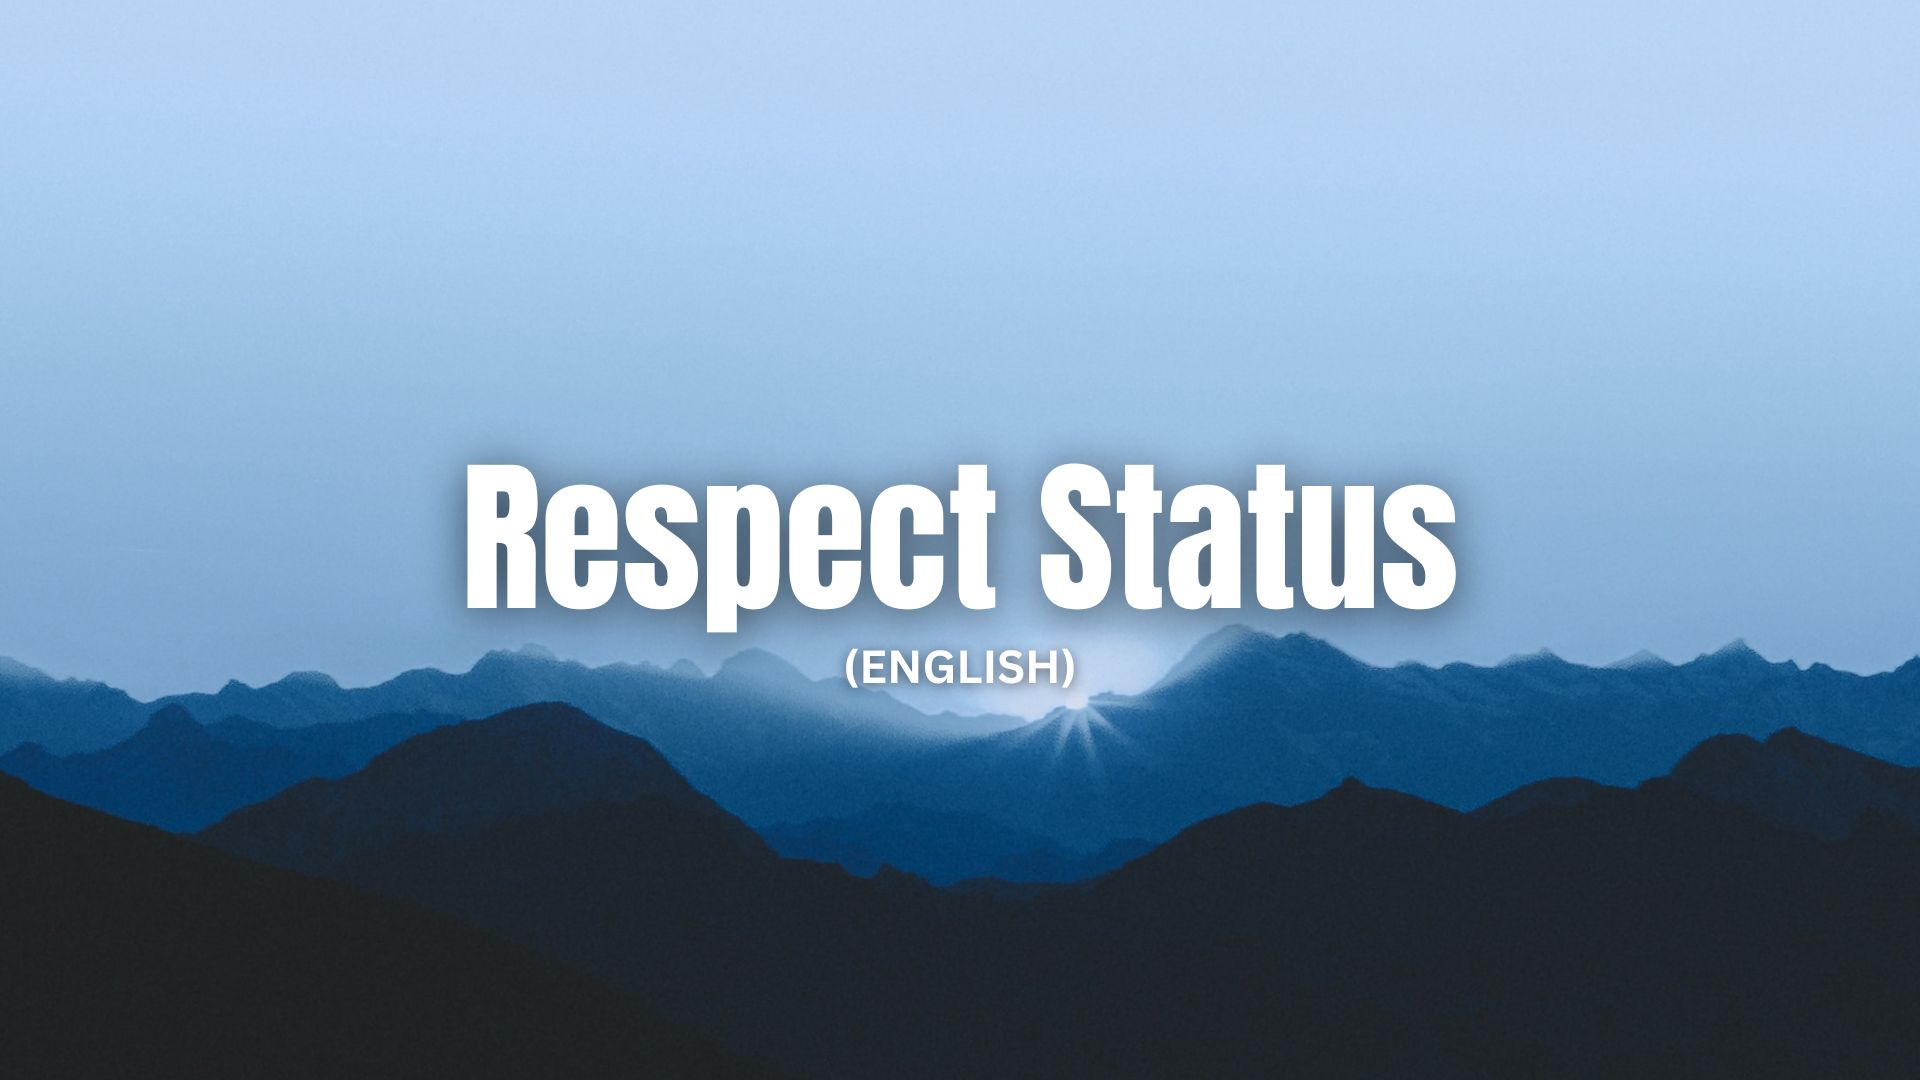 Respect Status in English